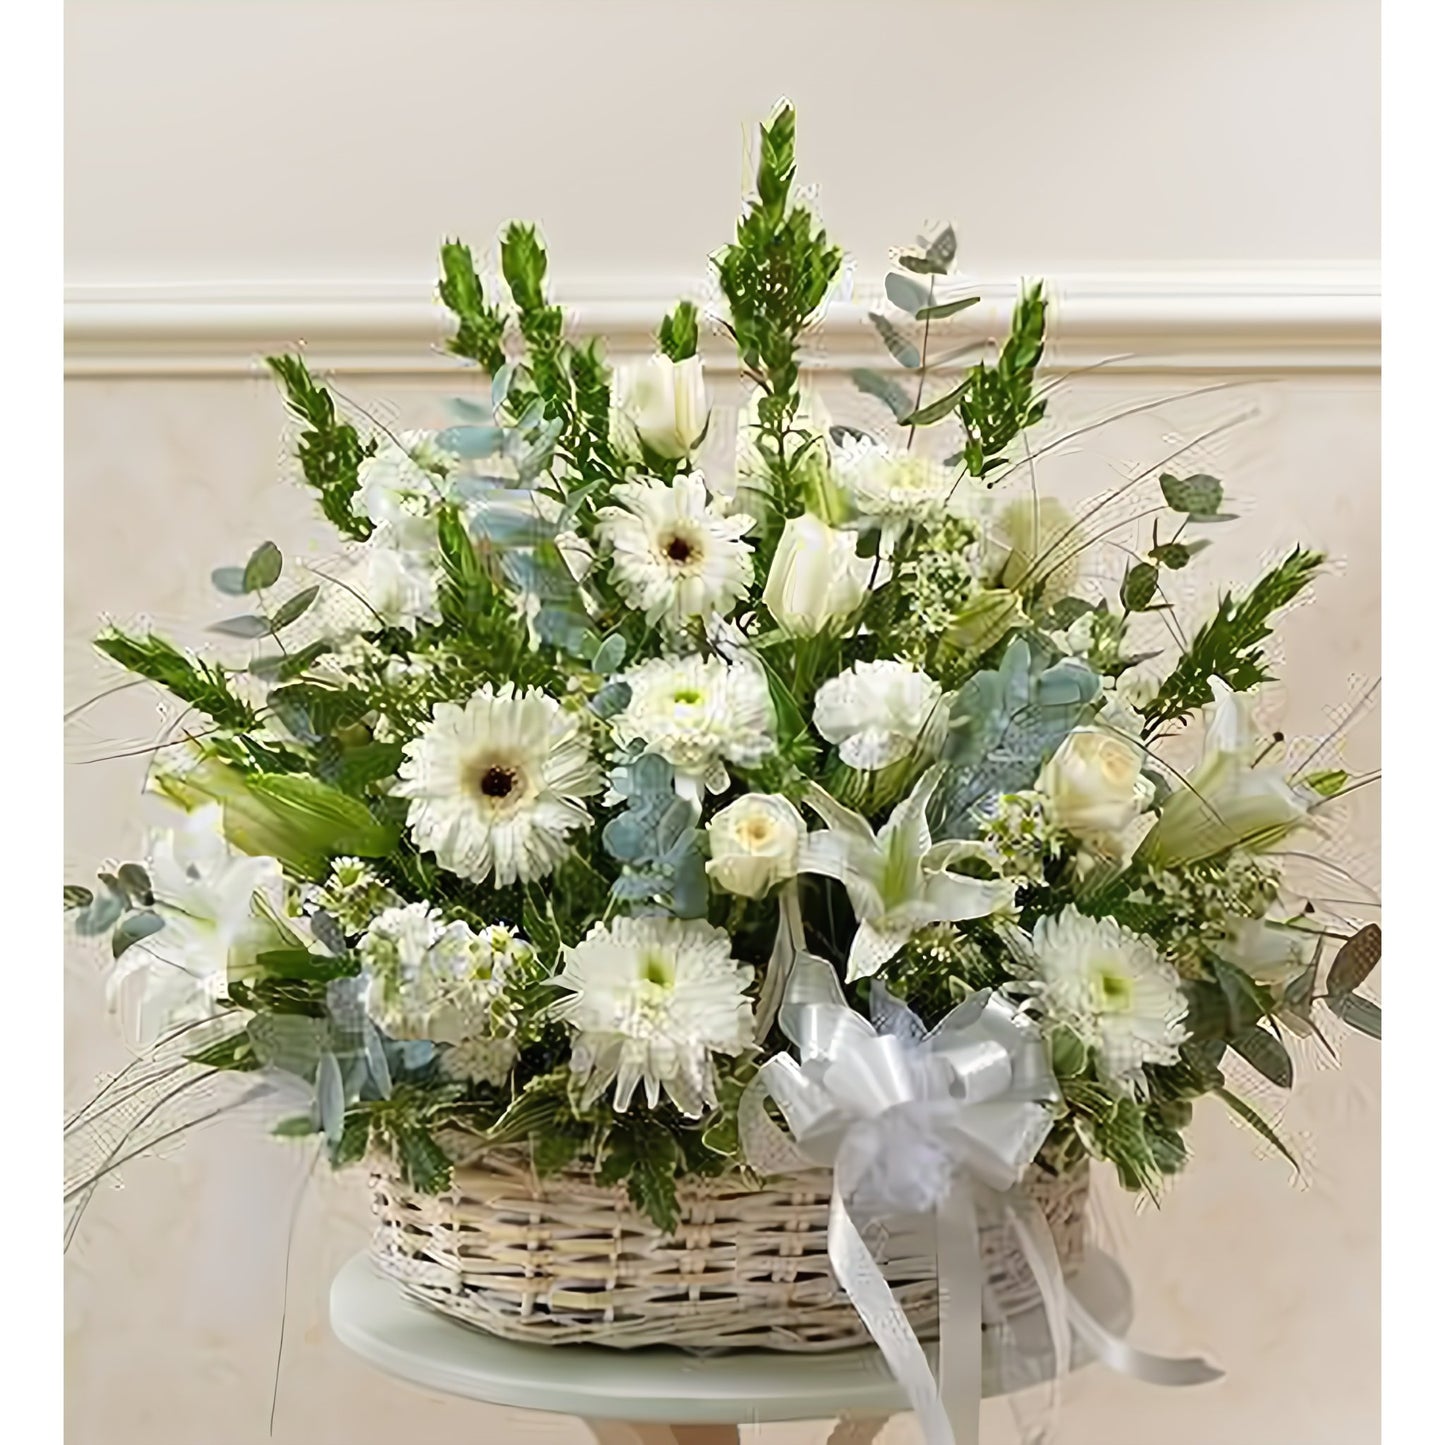 White Sympathy Arrangement in Basket - Floral_Arrangement - Flower Delivery NYC